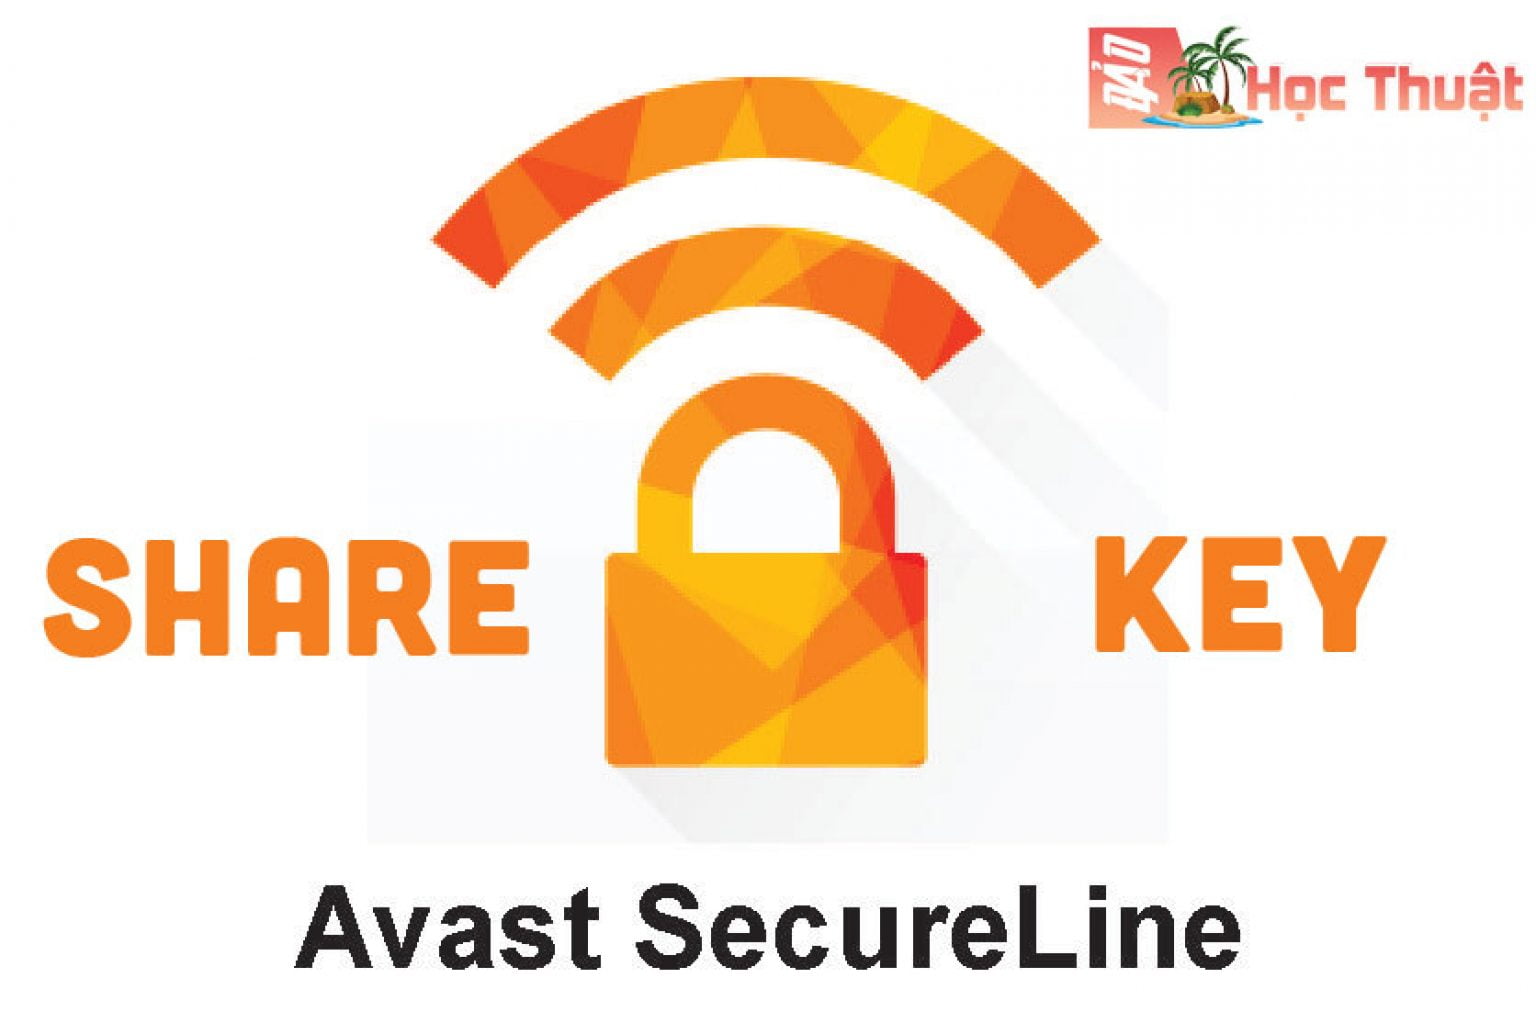 avast secureline vpn license key 2019 working